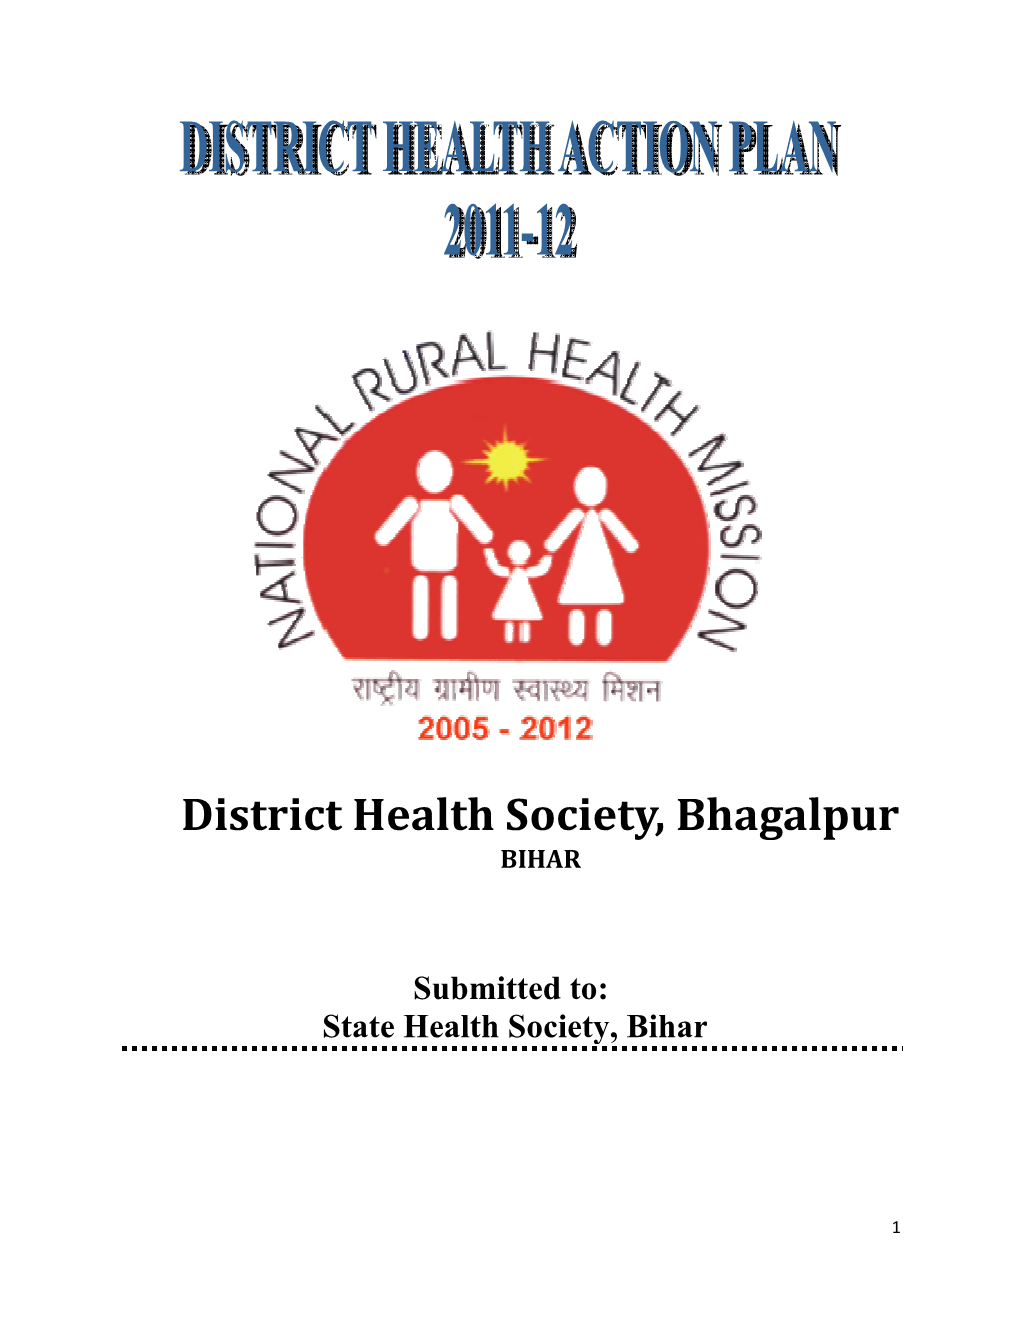 District Health Society, Bhagalpur BIHAR